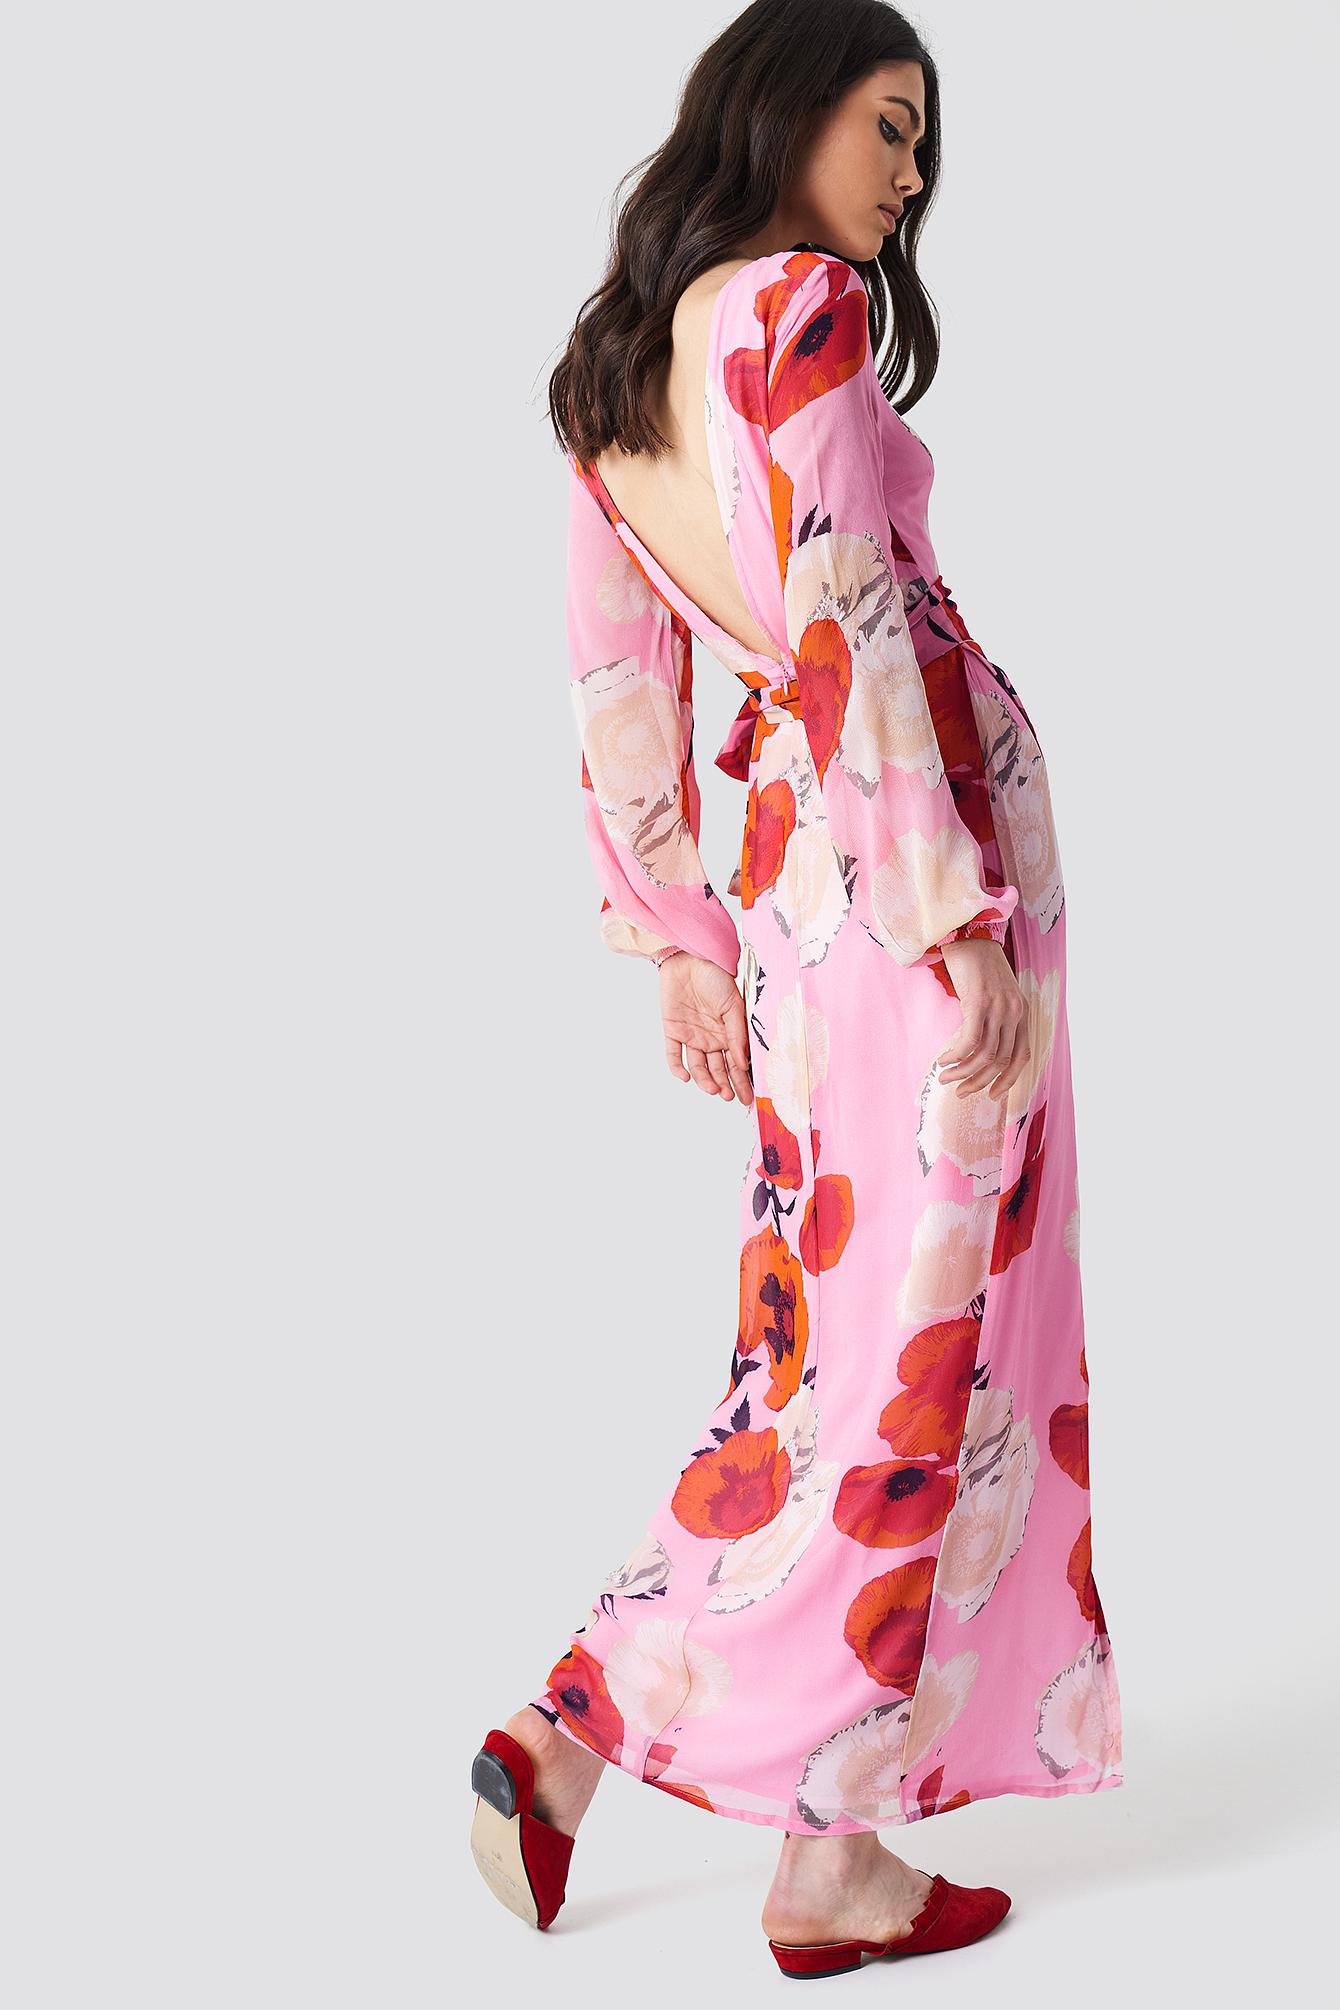 Gestuz Synthetic Violetta Long Dress Pink Roses - Lyst